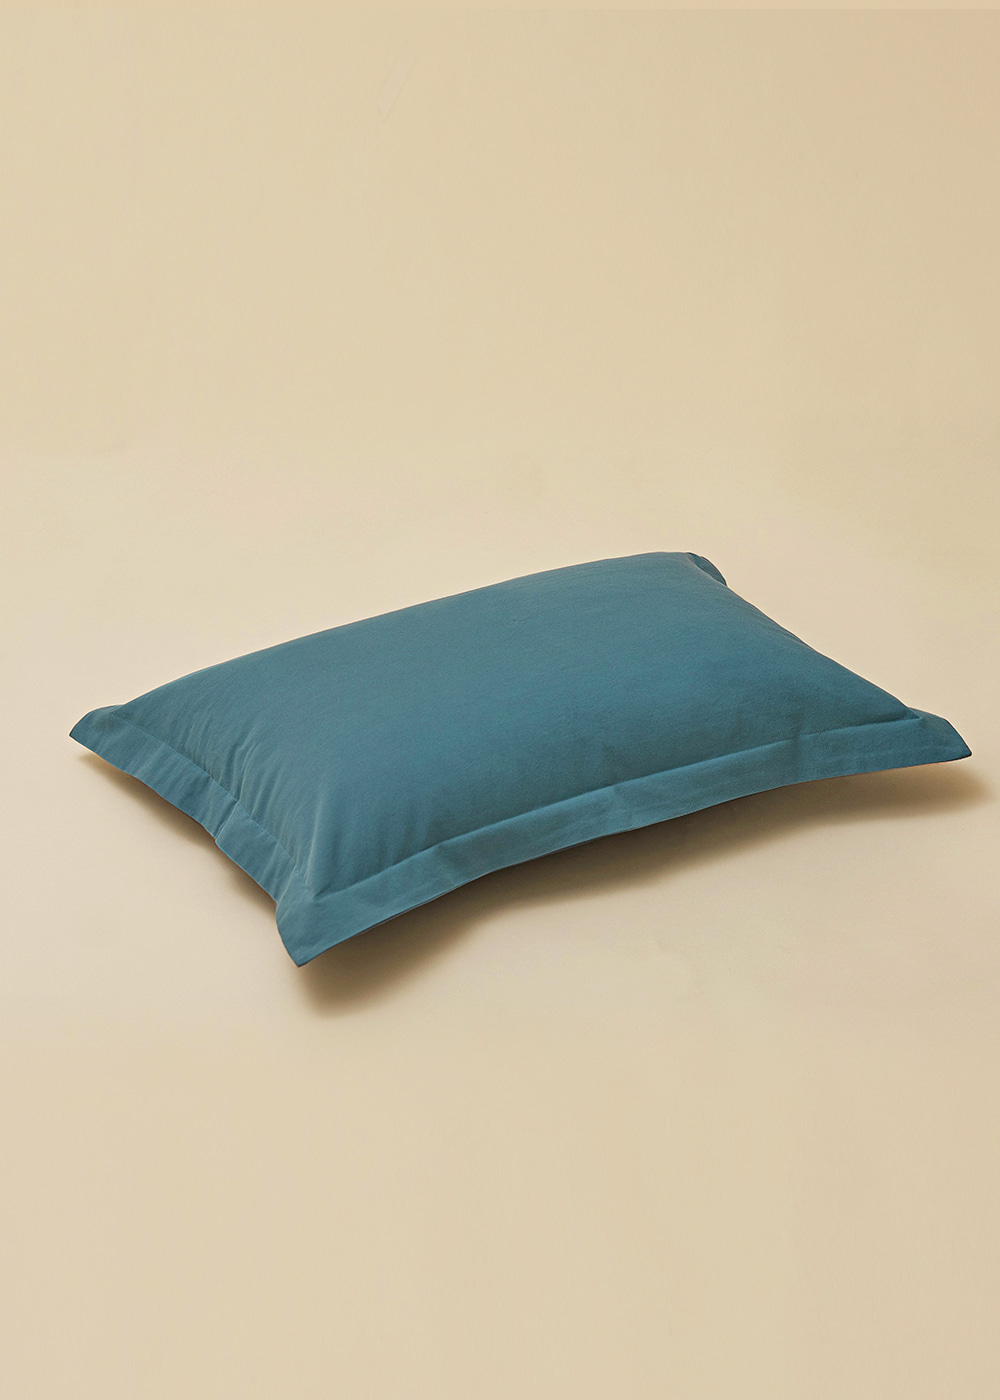 rainbow pillow cover : blue